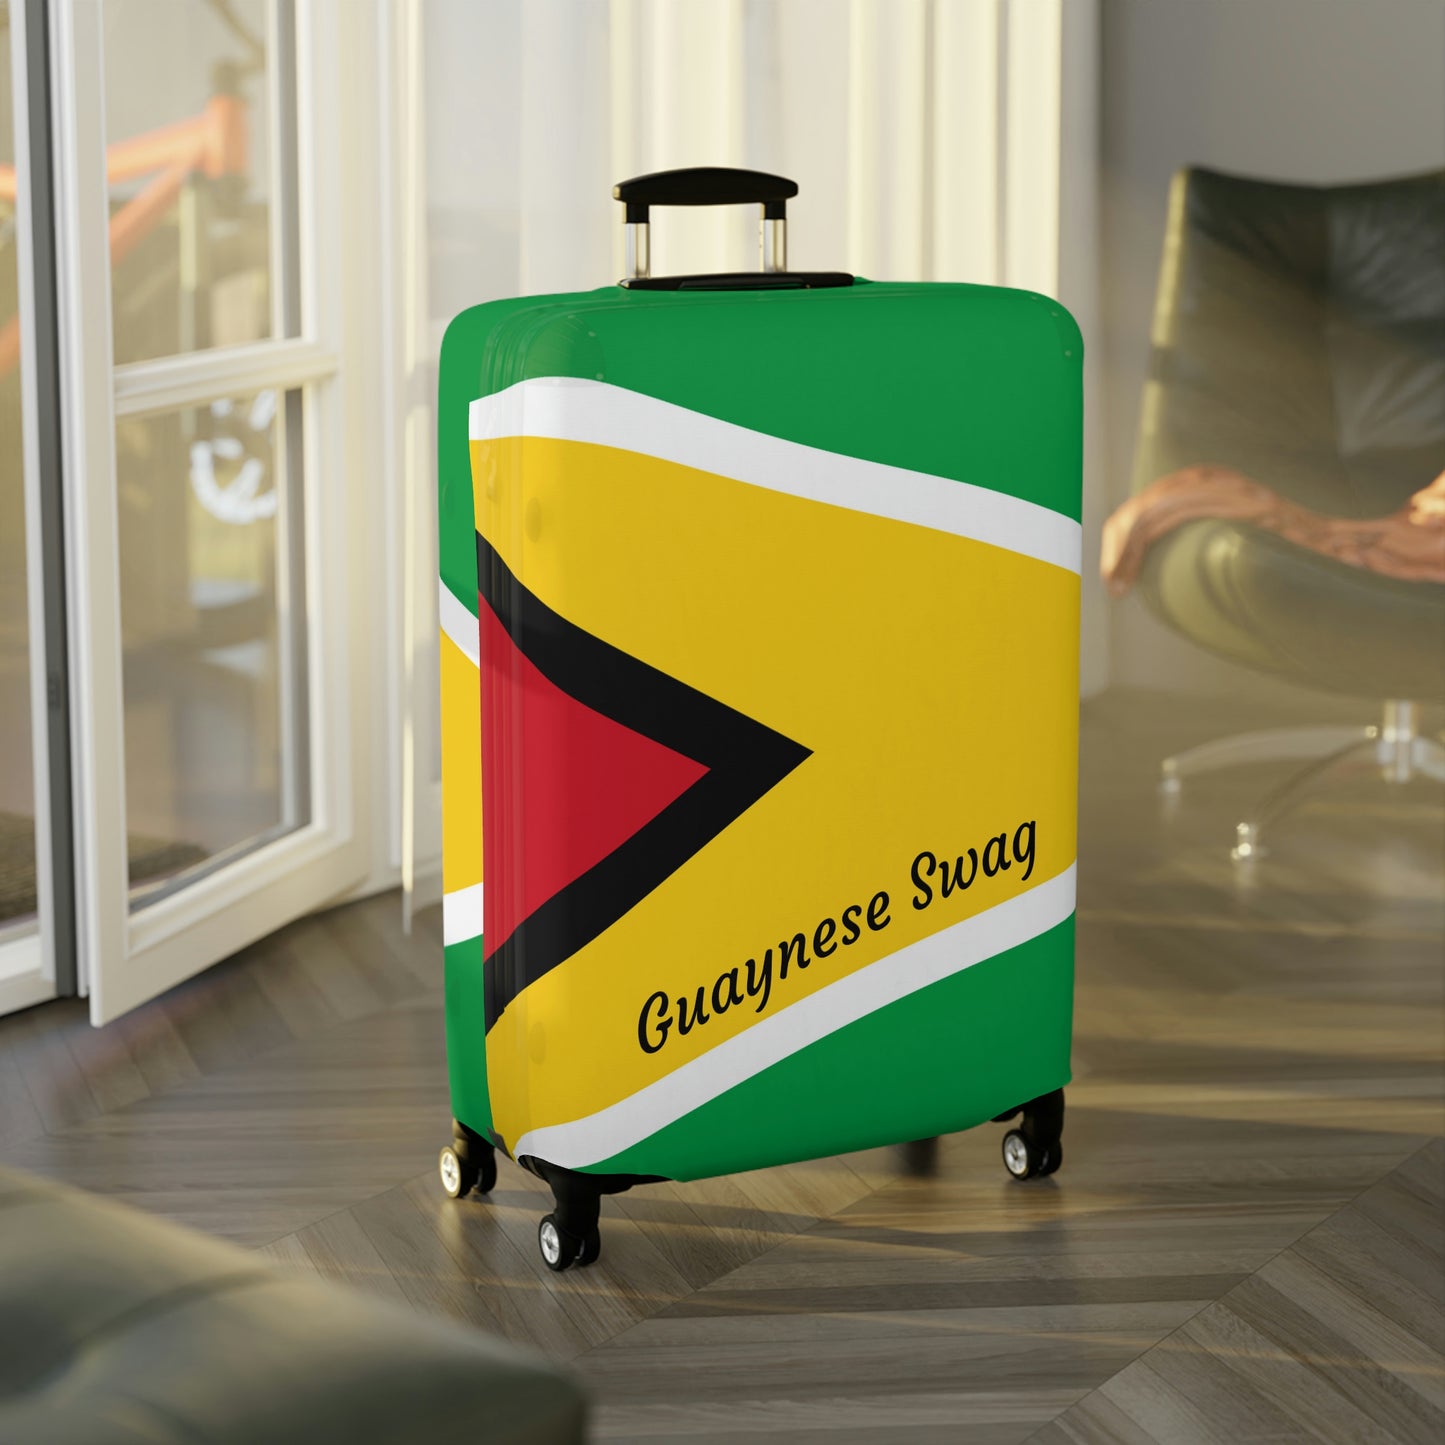 Guyana Flag Luggage Cover